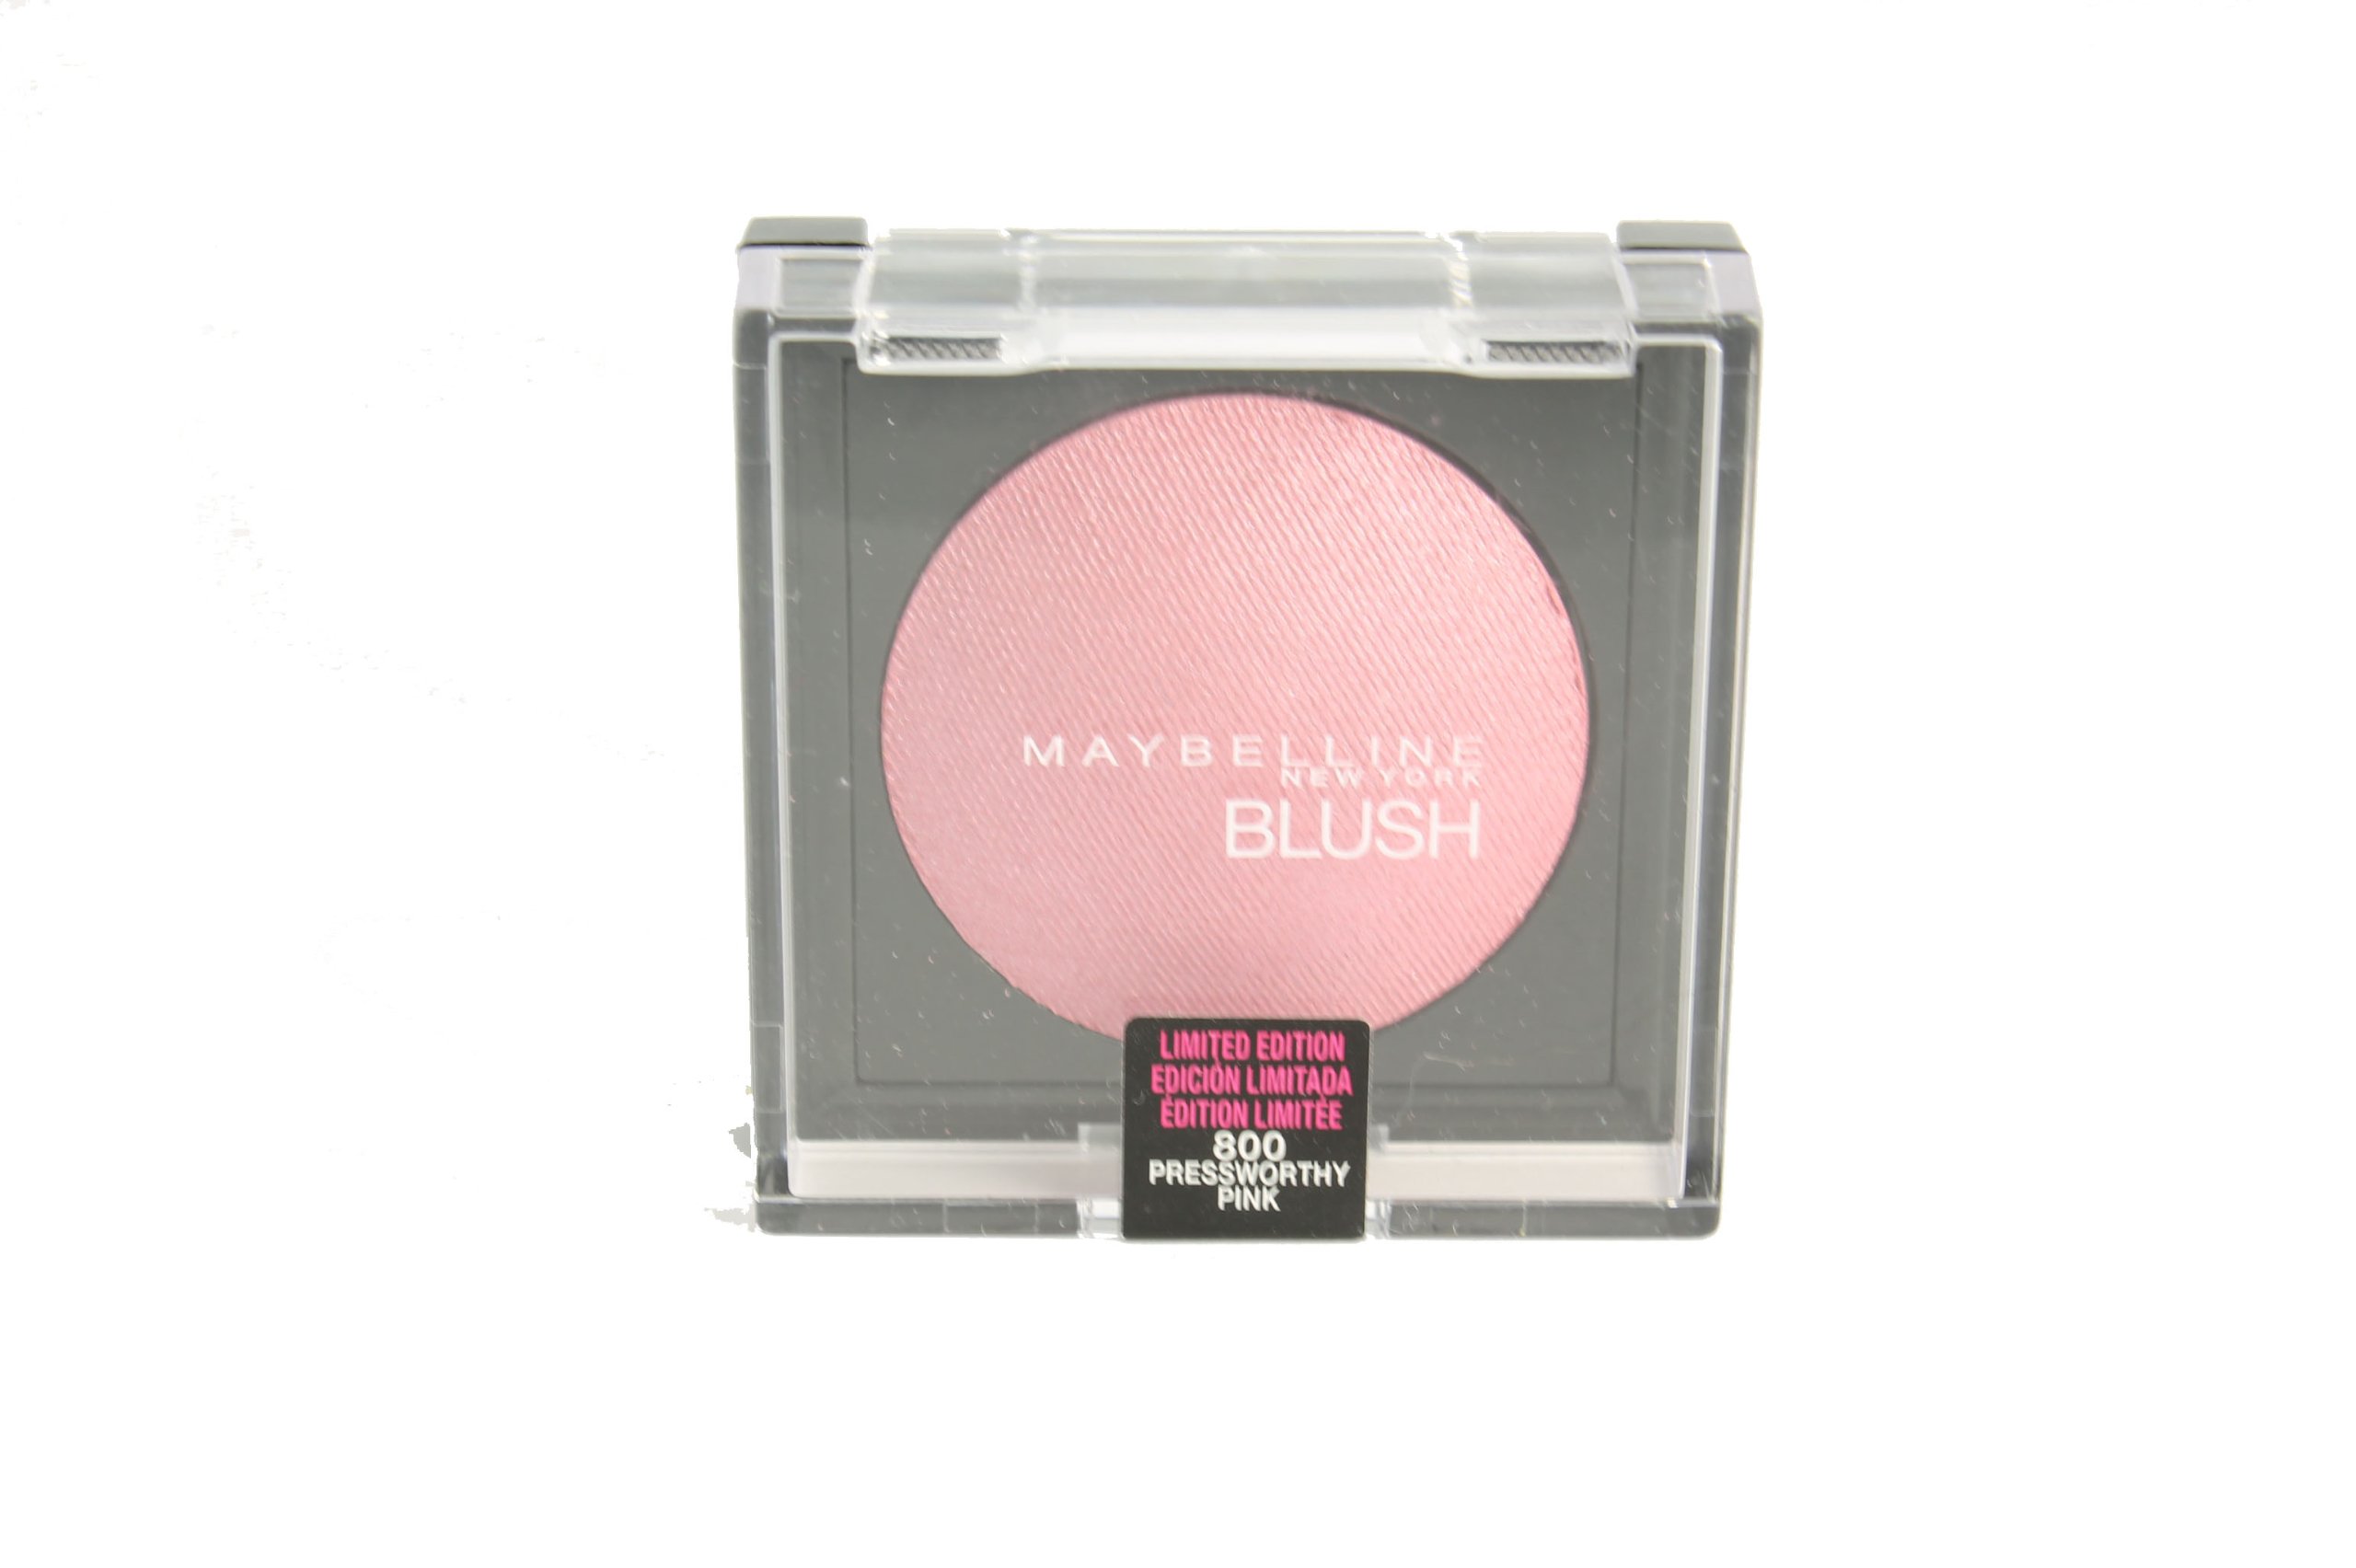 Maybelline New York Maybelline Blush, Limited Edition #800 Pressworthy Pink